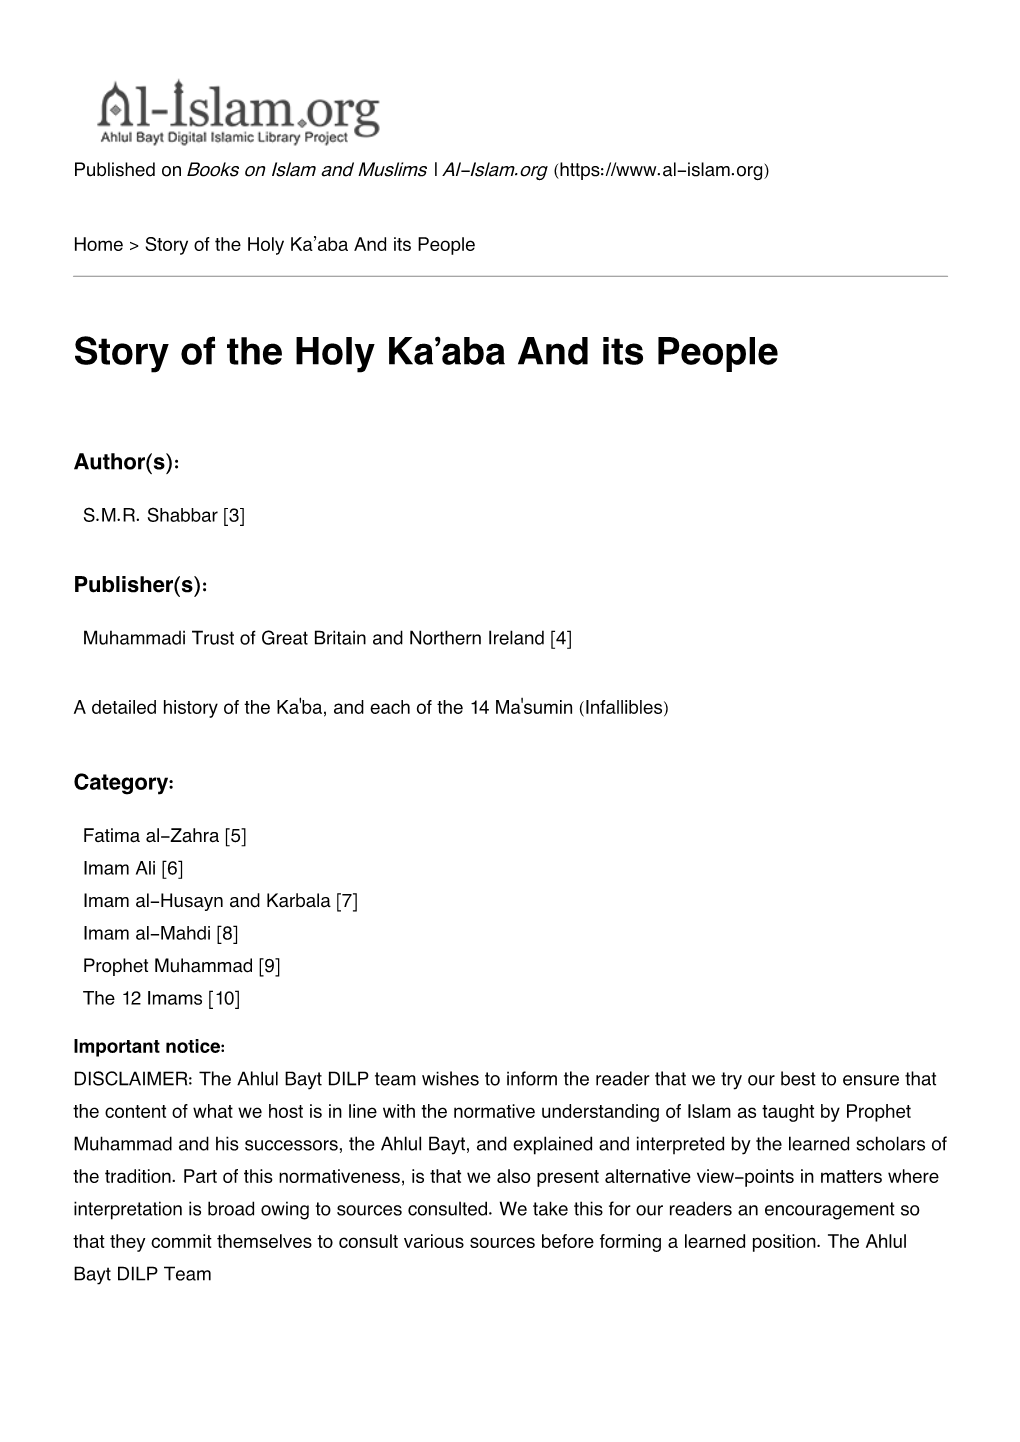 Story of the Holy Ka'aba and Its People